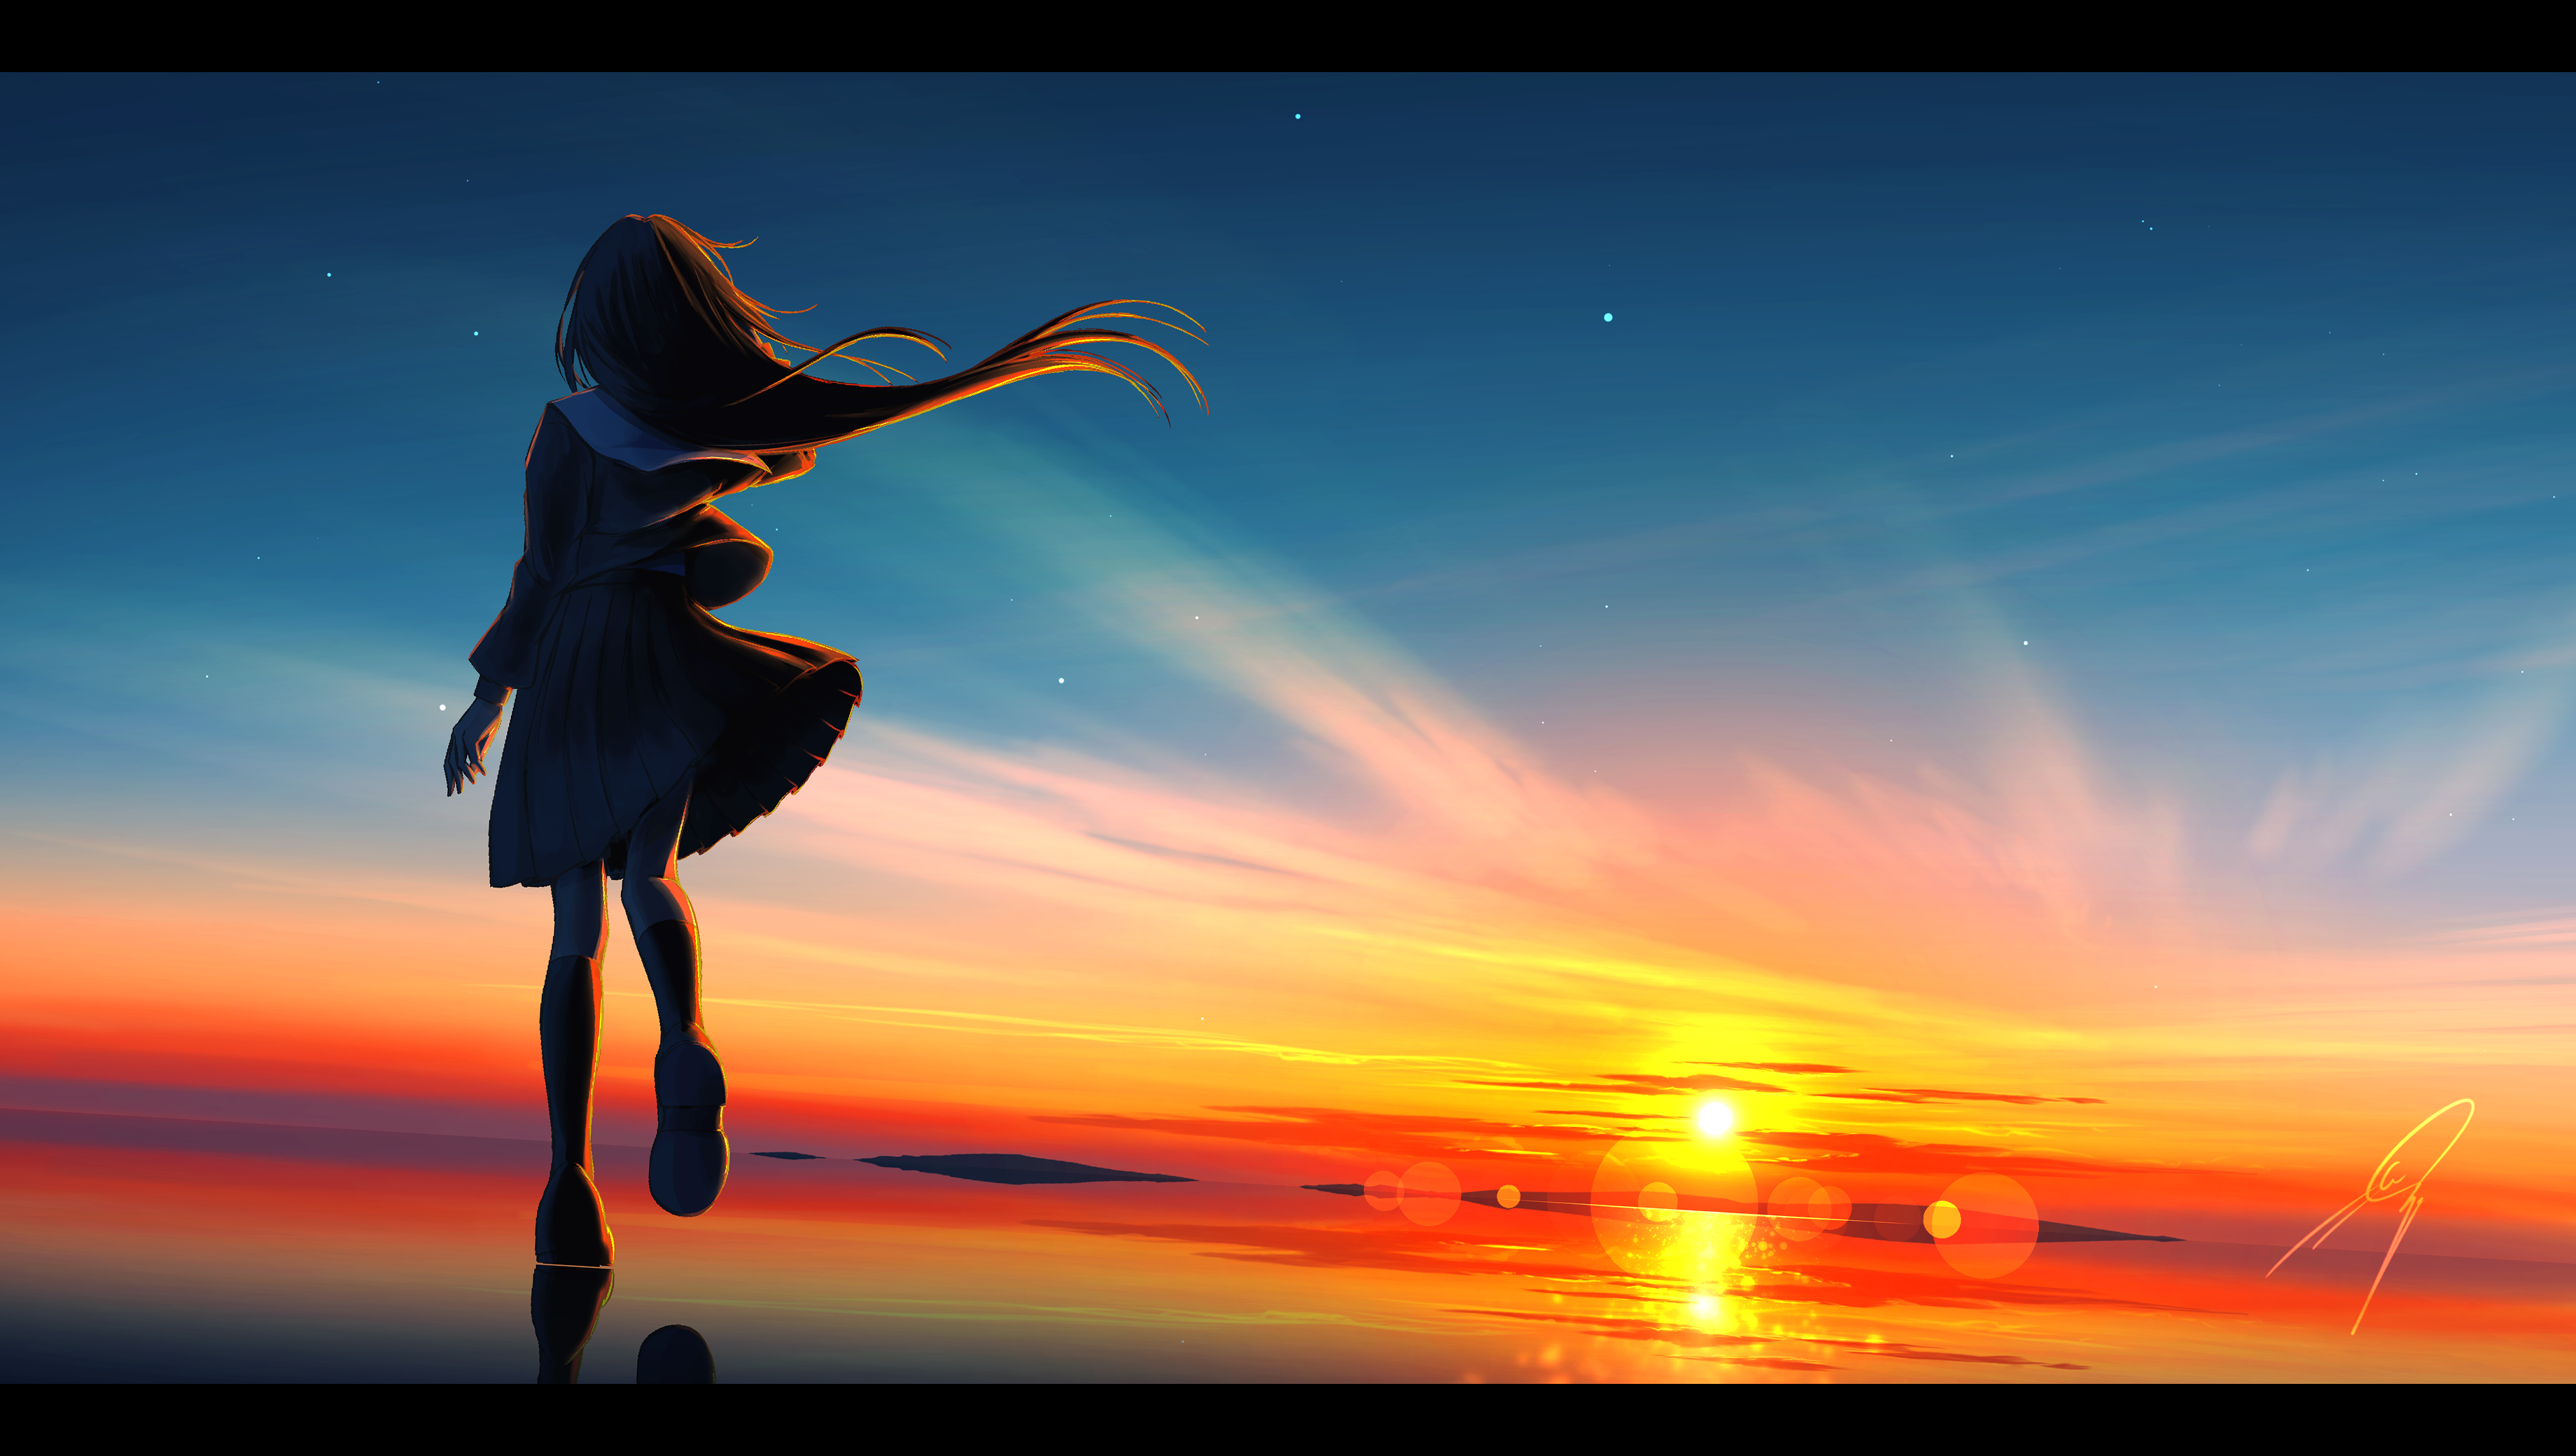 Anime Sky Reflection 3680x2080